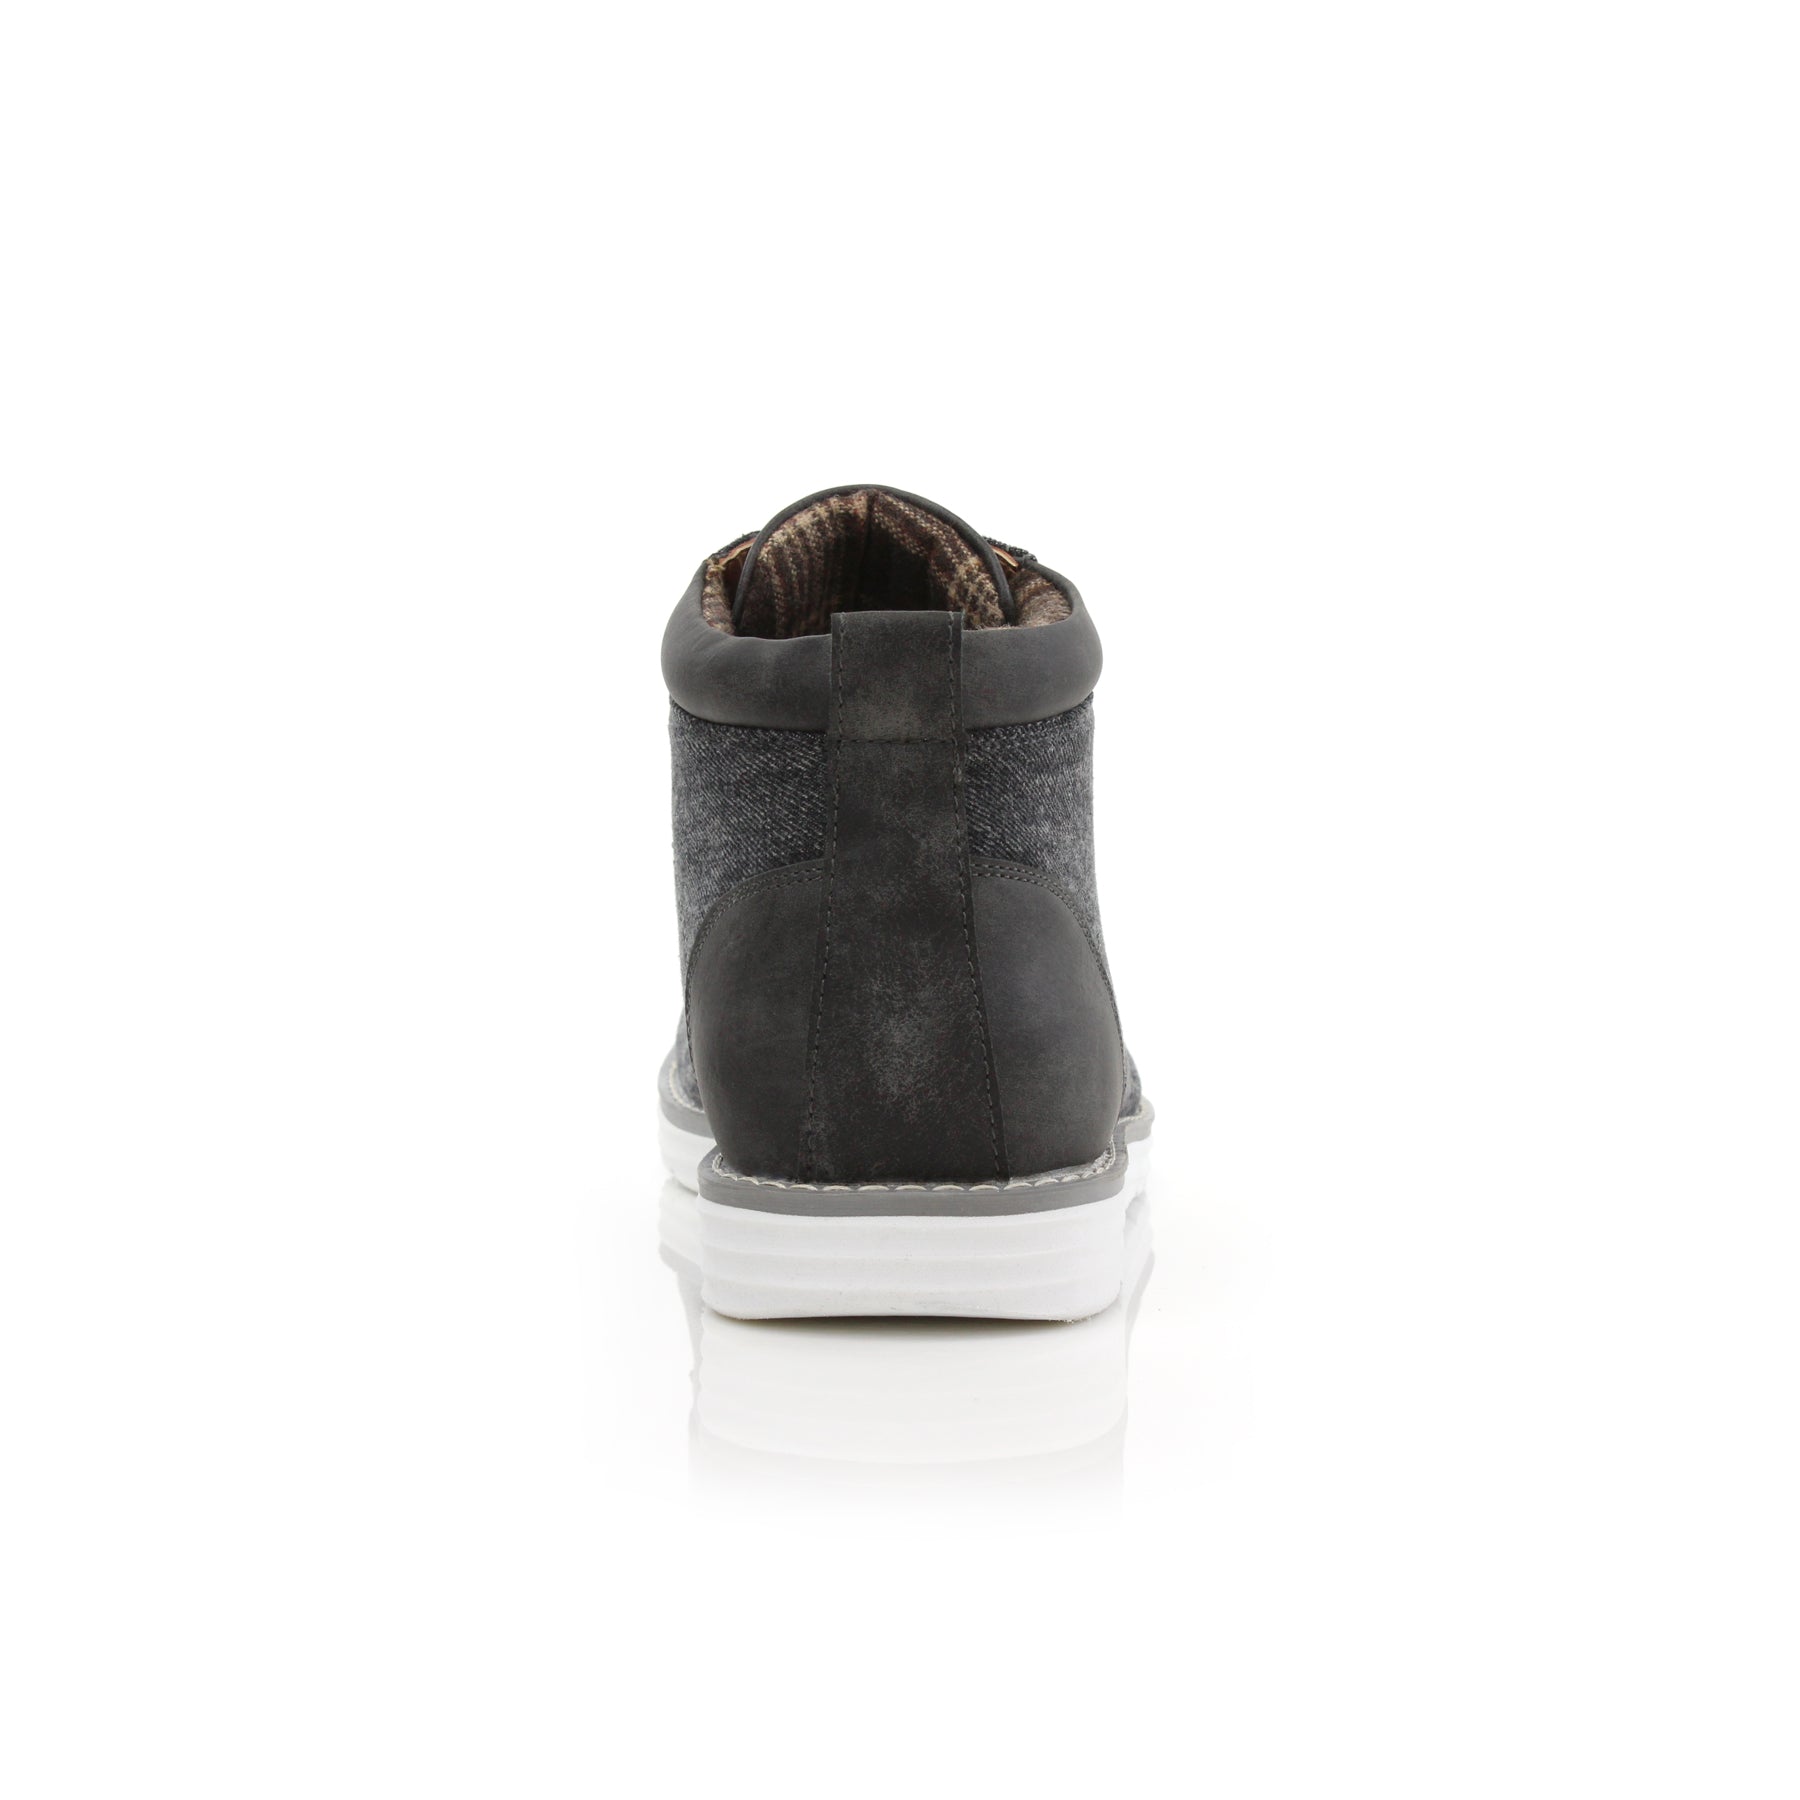 Denim Chukka Sneakers | Dustin by Polar Fox | Conal Footwear | Back Angle View